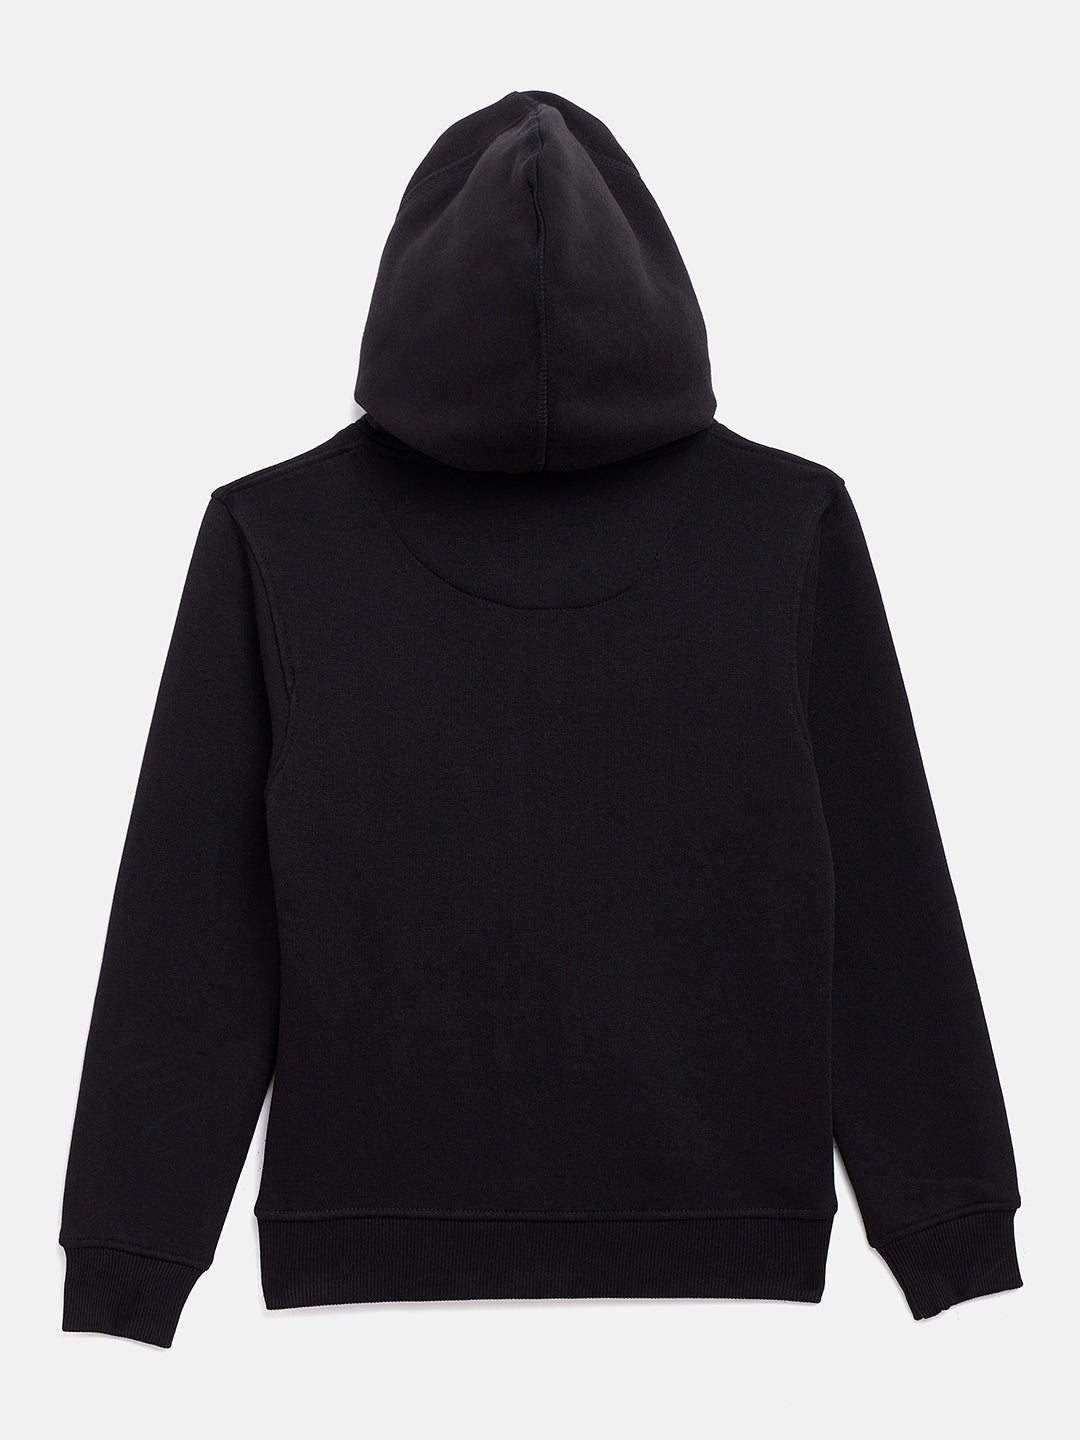 Black Hooded Sweatshirt - Girls Sweatshirts